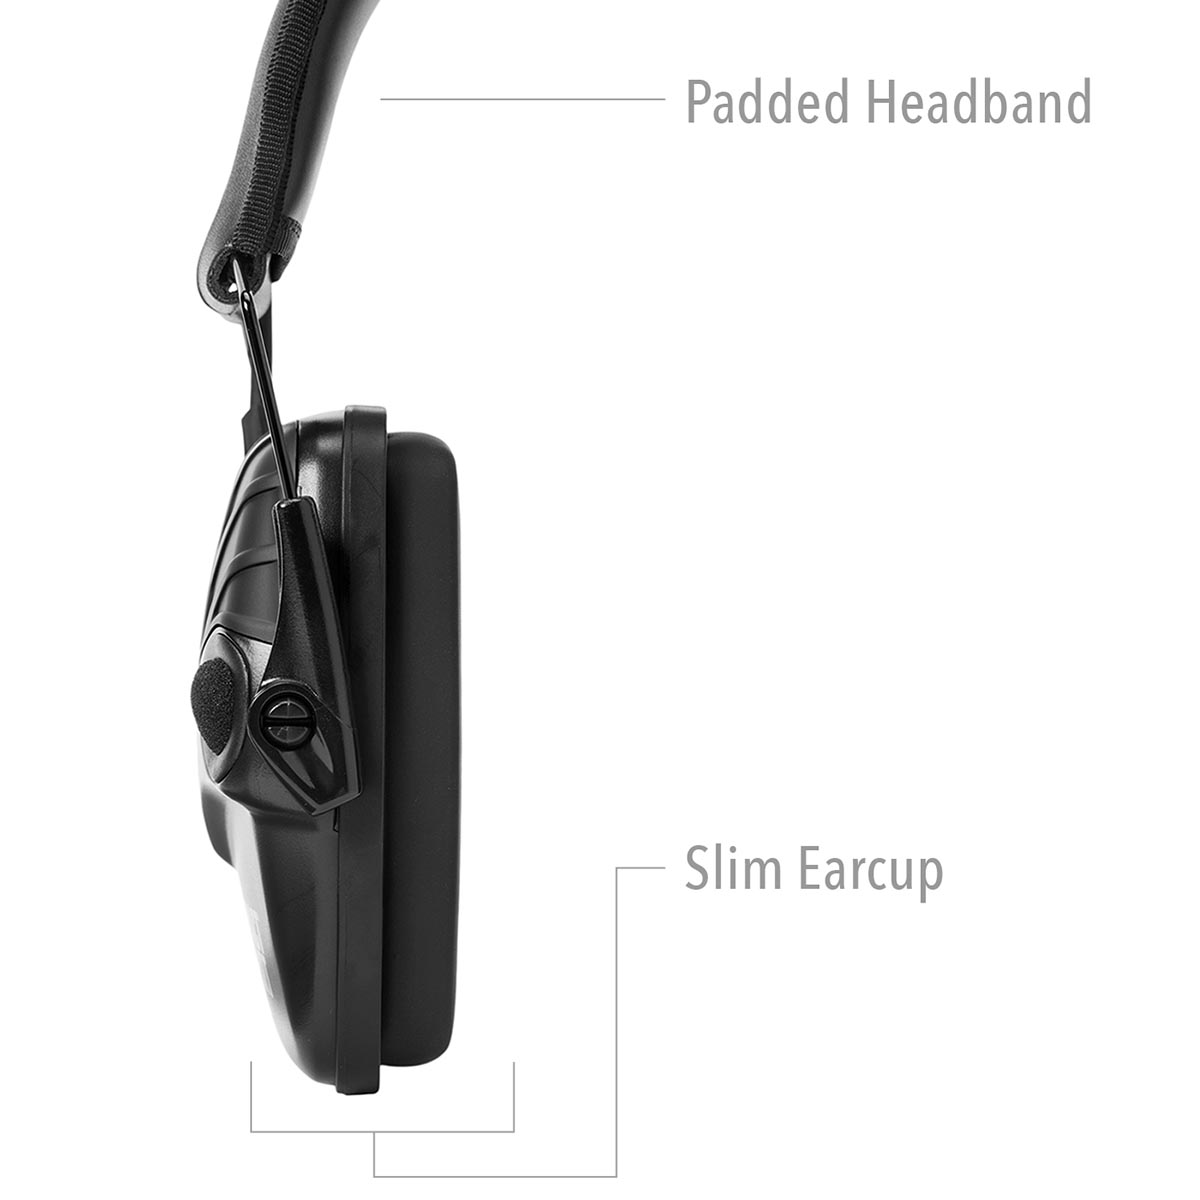 Honeywell Impact Sport Earmuffs with Deluxe Headband R-02524